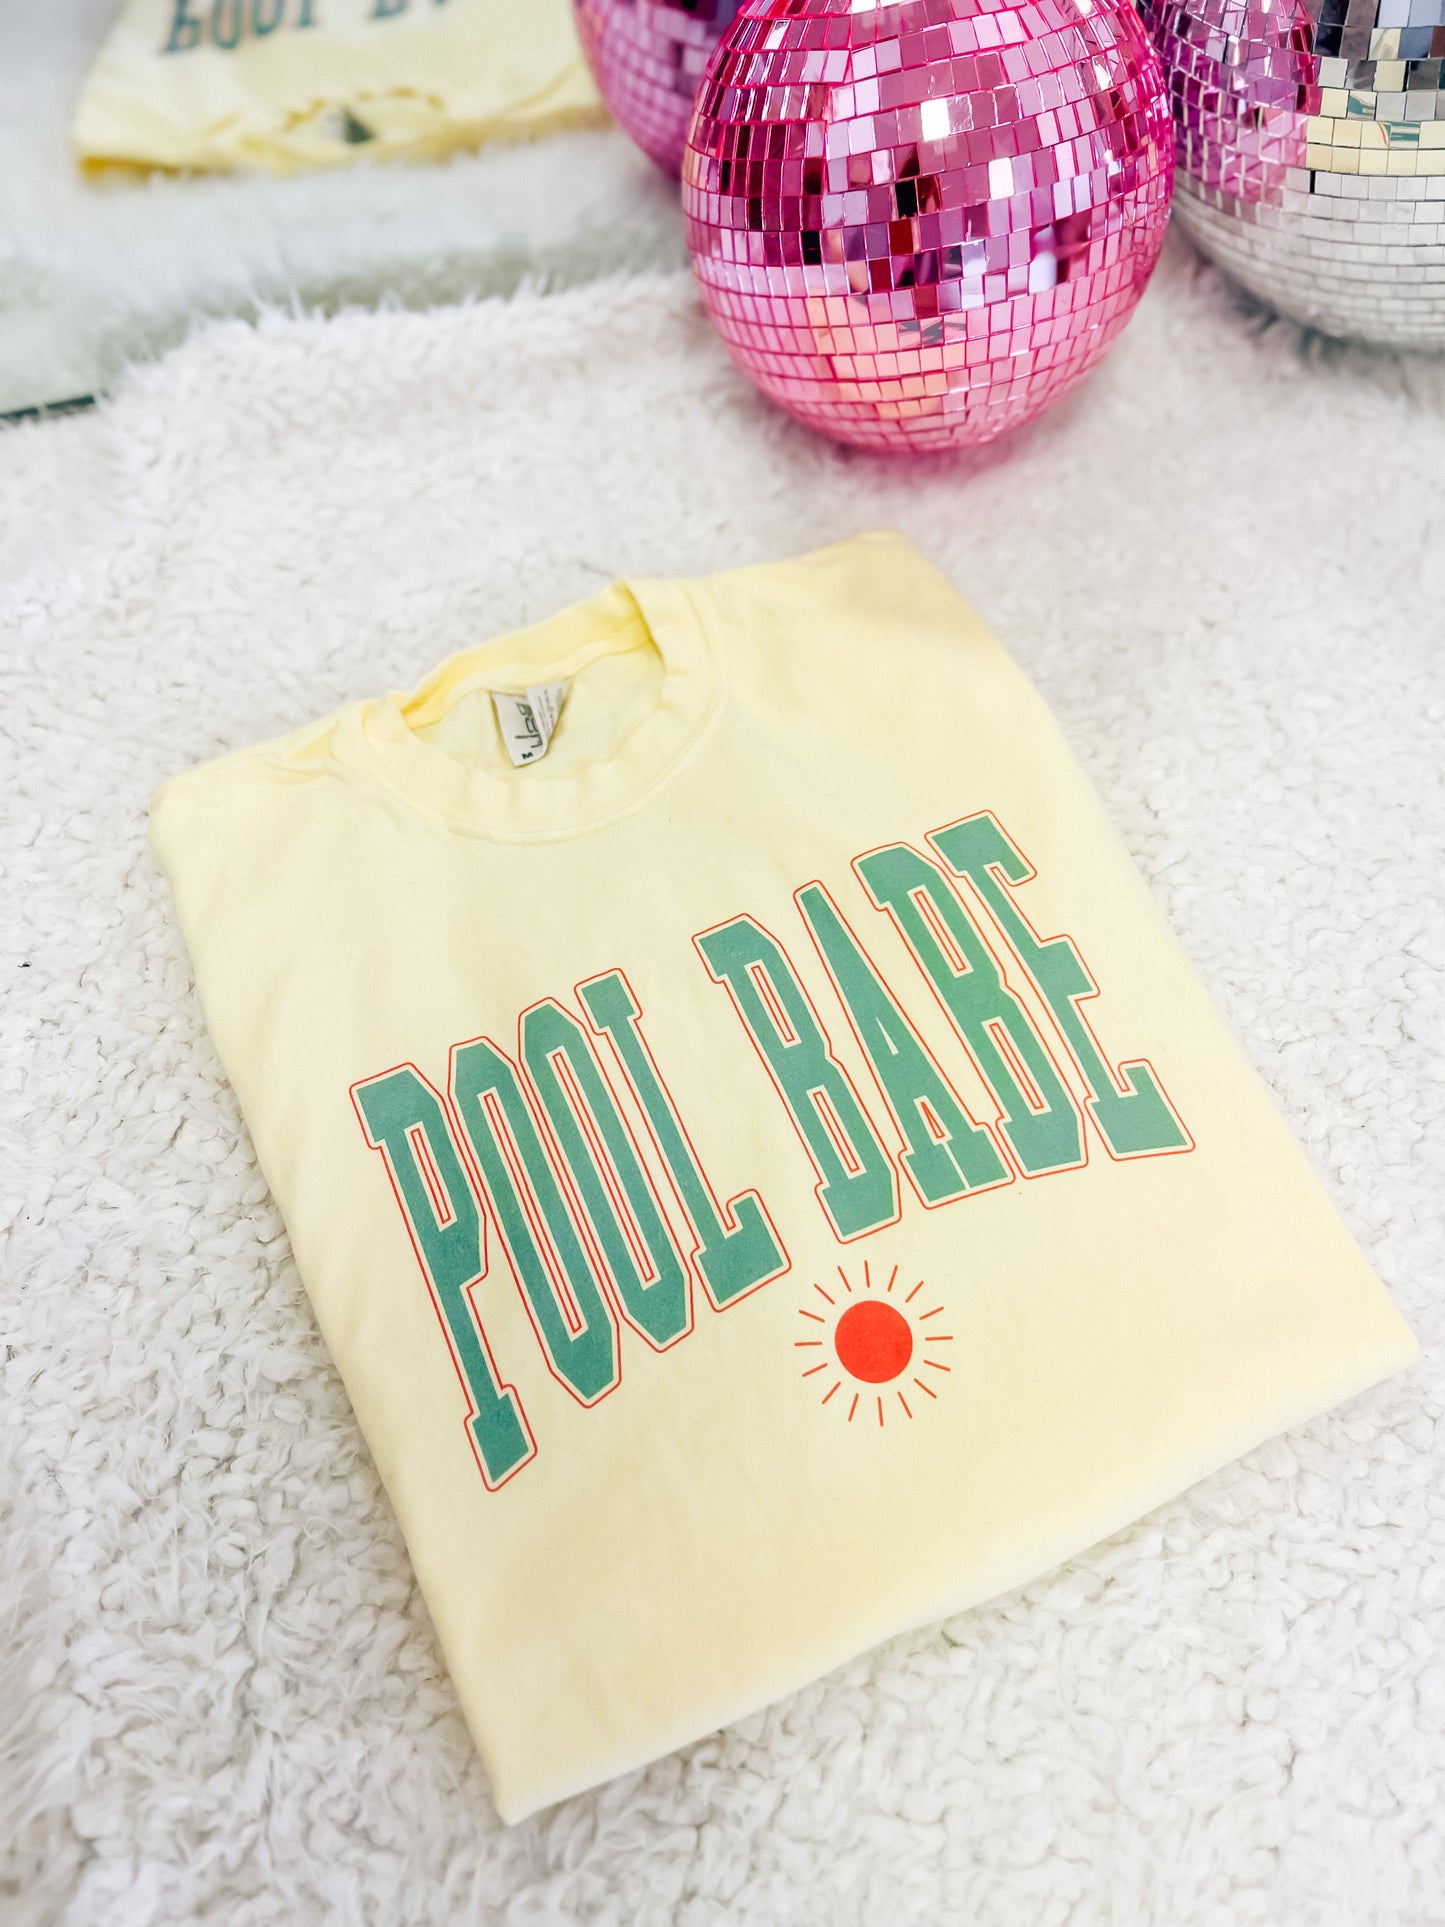 Pool Babe Tee